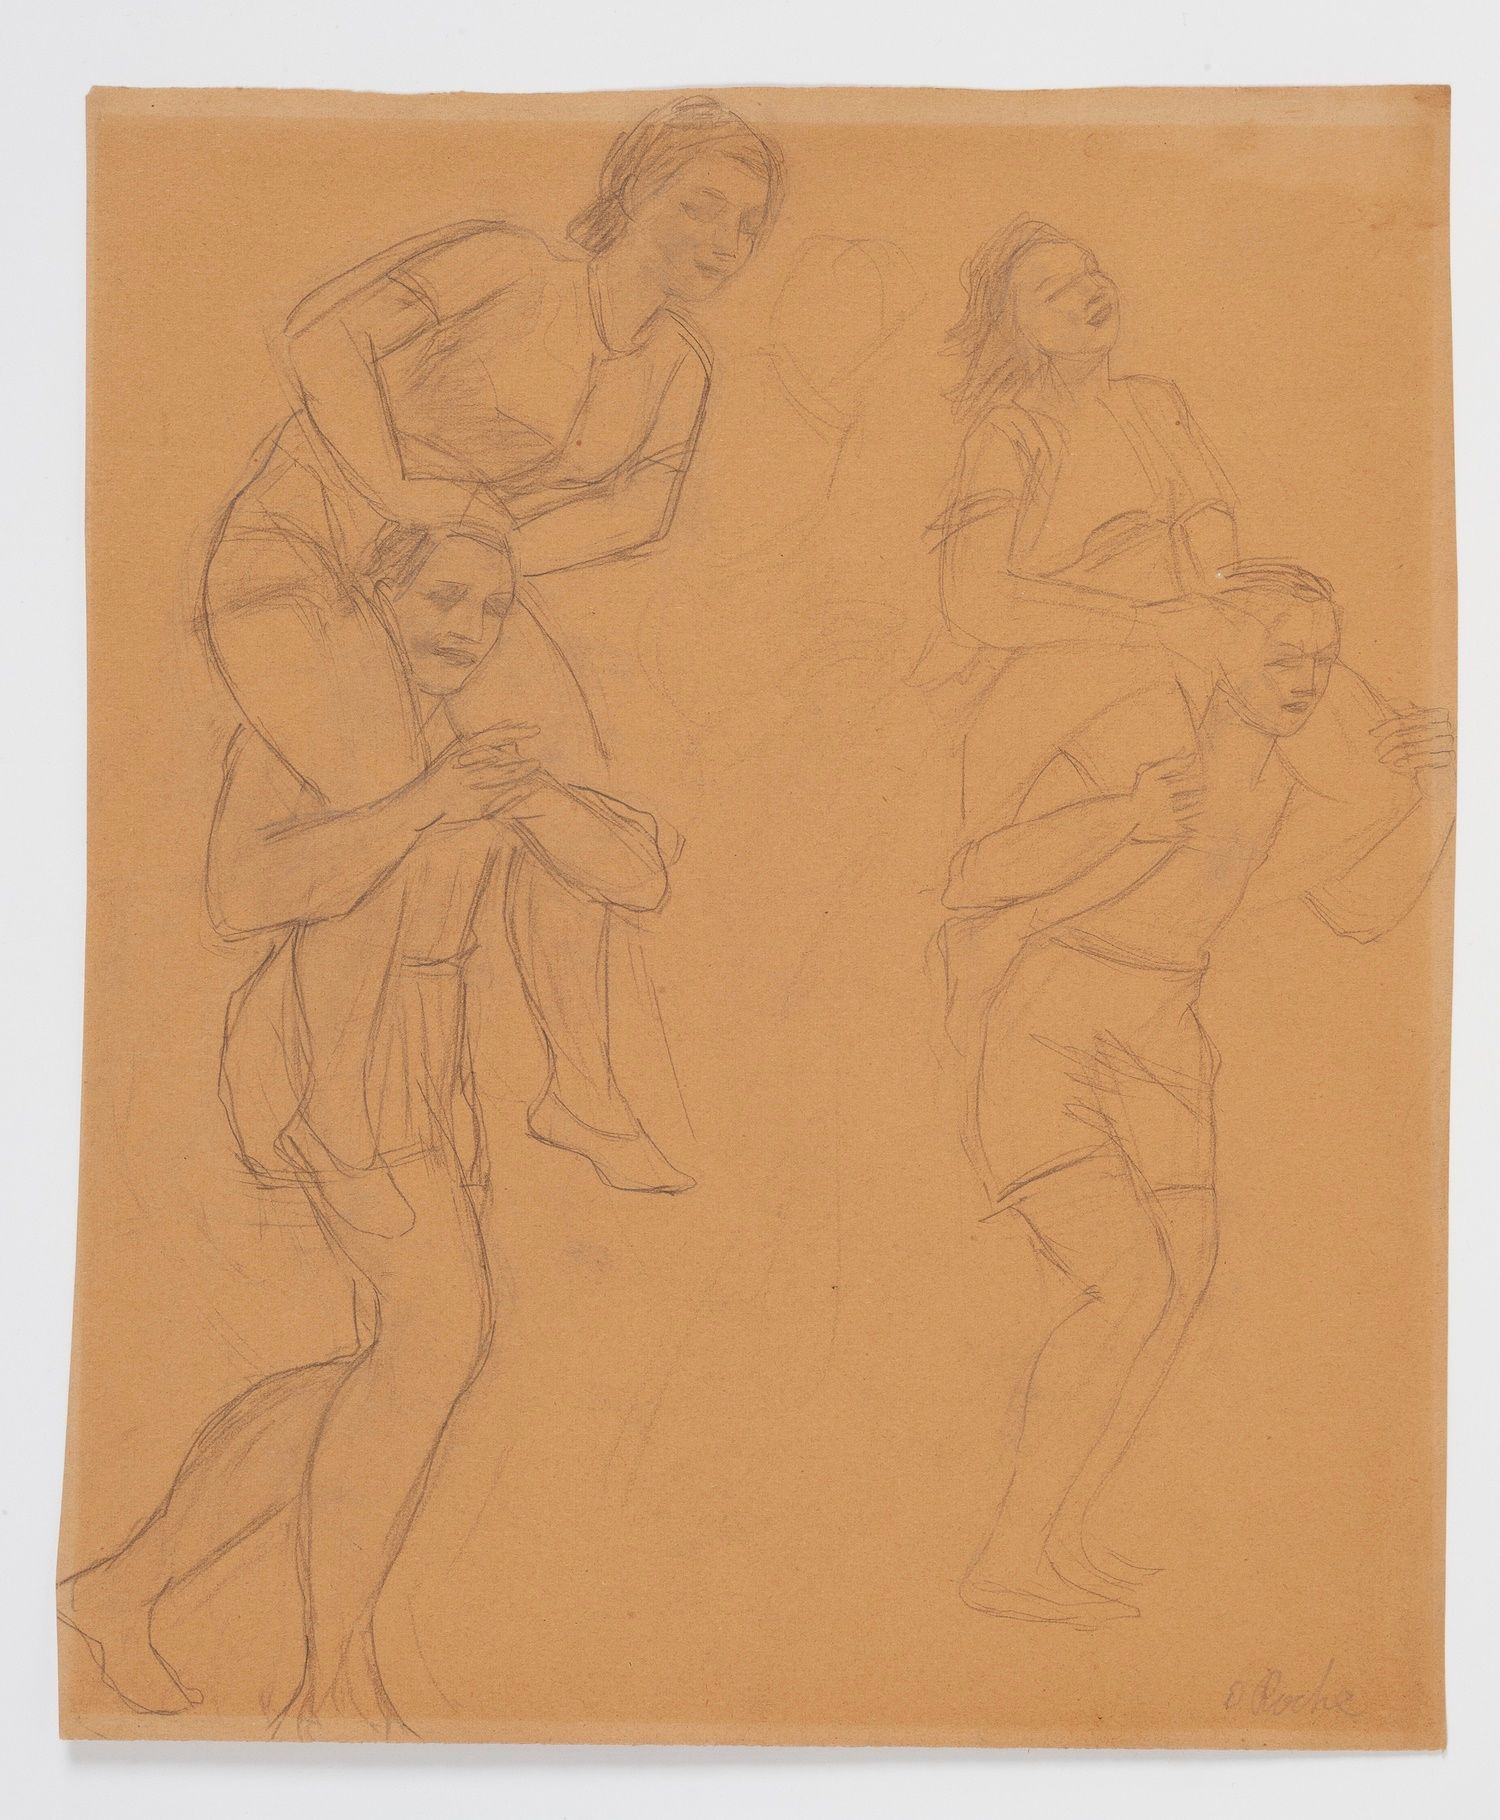 Null Odilon ROCHE (1868-1947) 

Etude corps

Crayon sur papier brun, signé en ba&hellip;